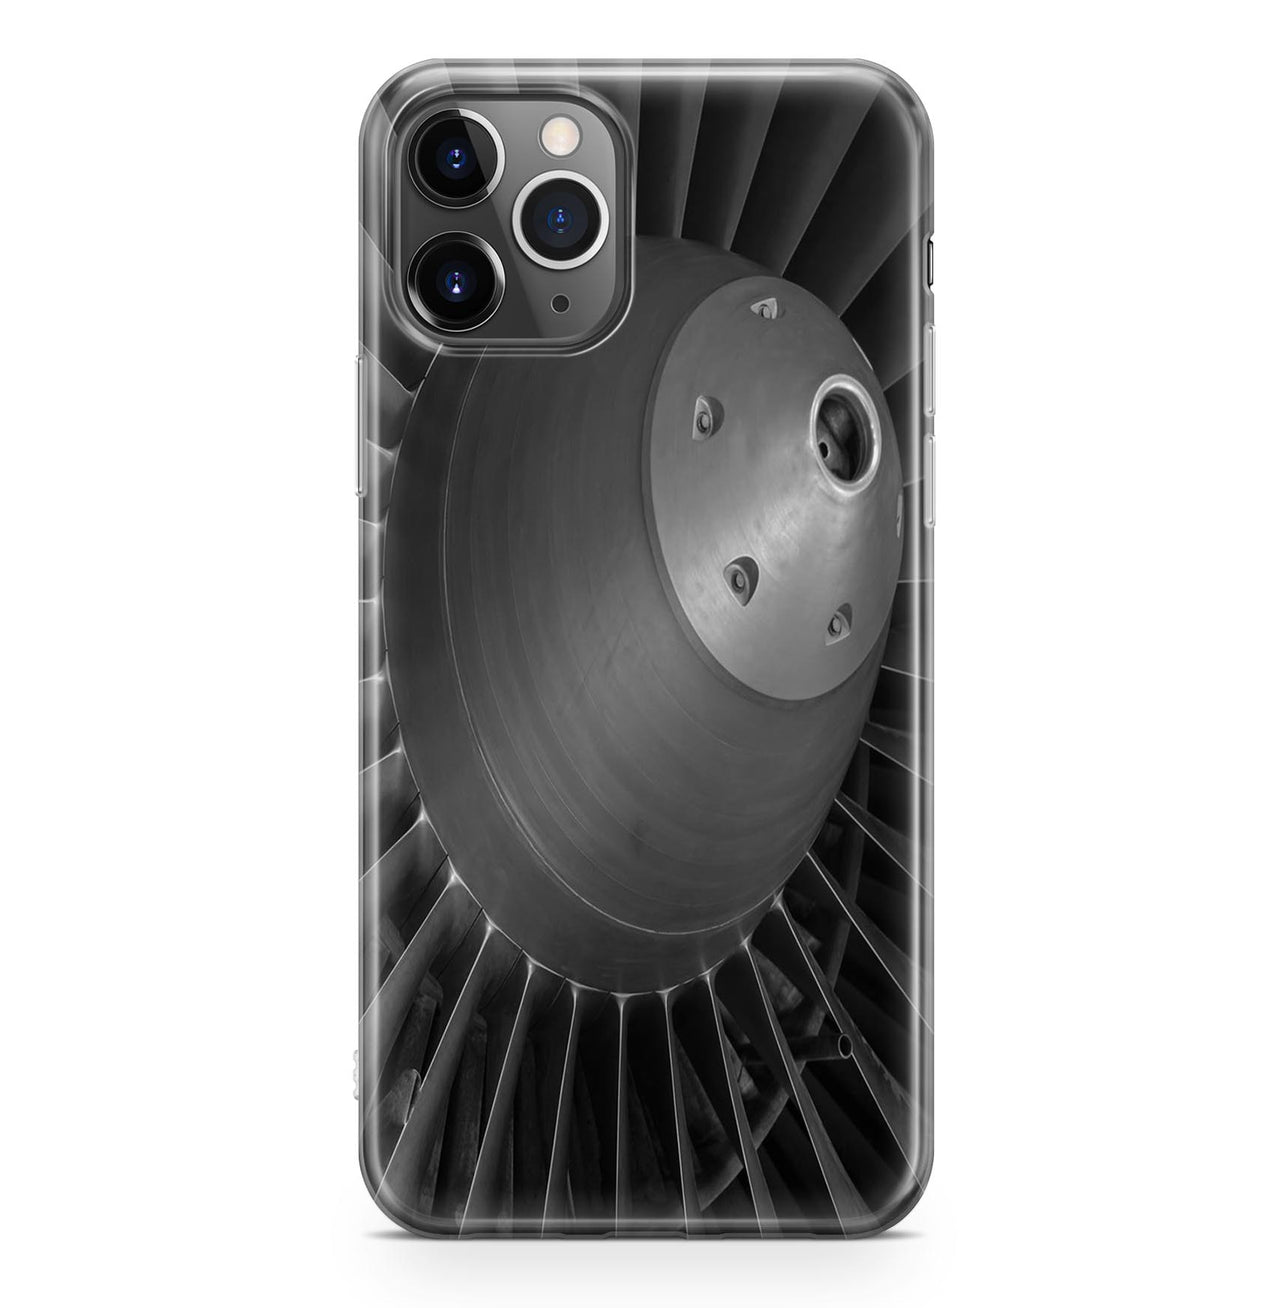 Super View of Jet Engine Designed iPhone Cases